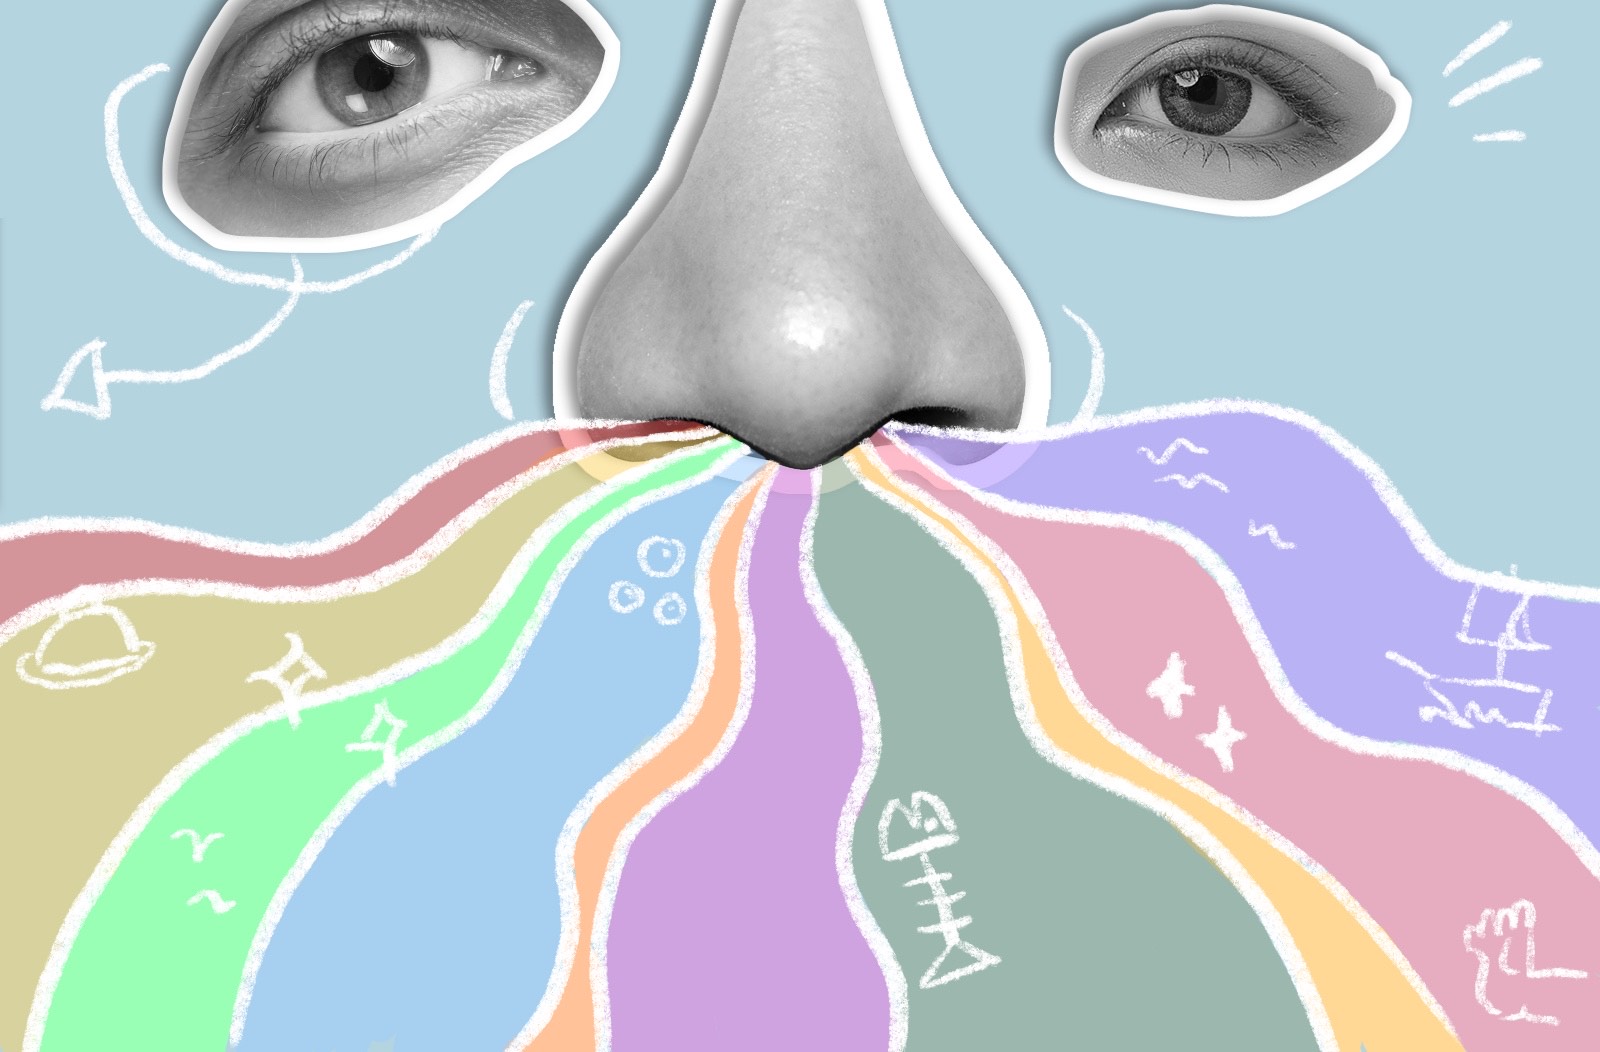 A nose inhaling a wide spectrum of color